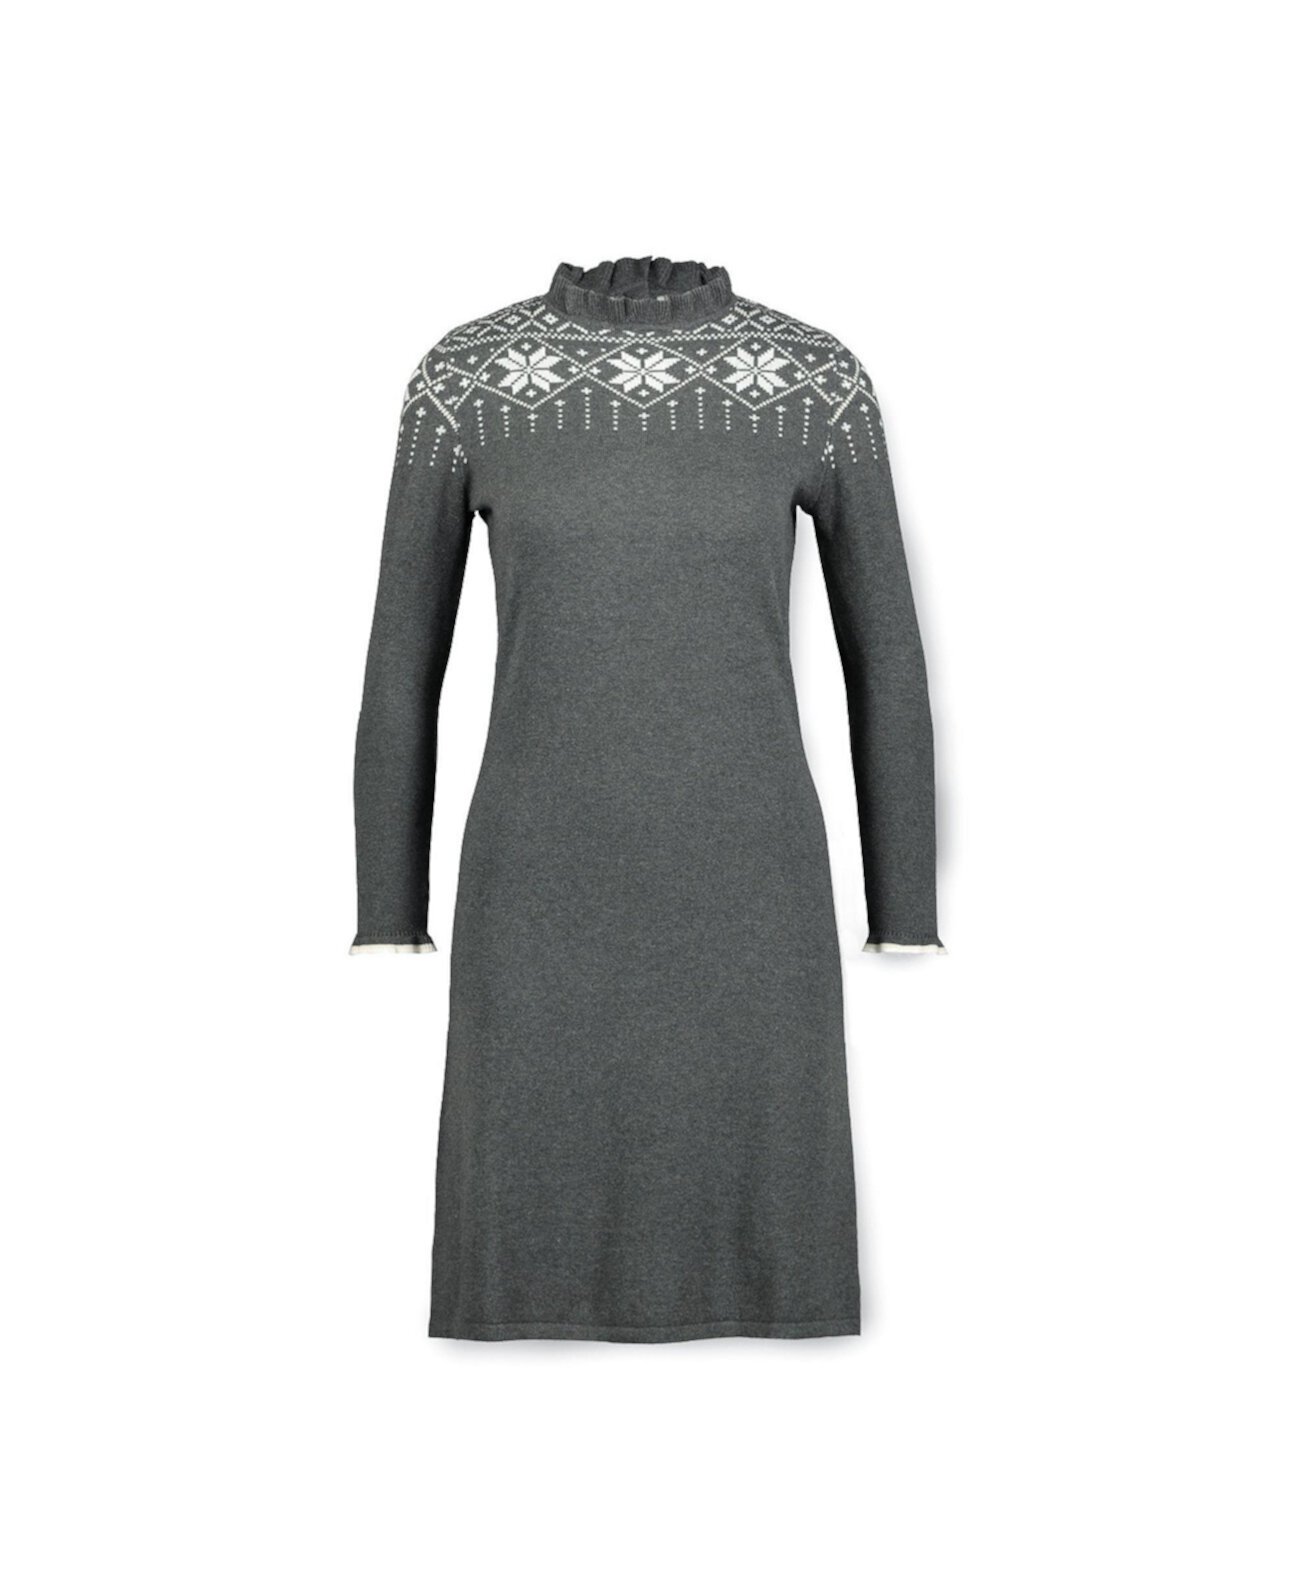 Женское платье-свитер с жаккардовым узором Hope & Henry